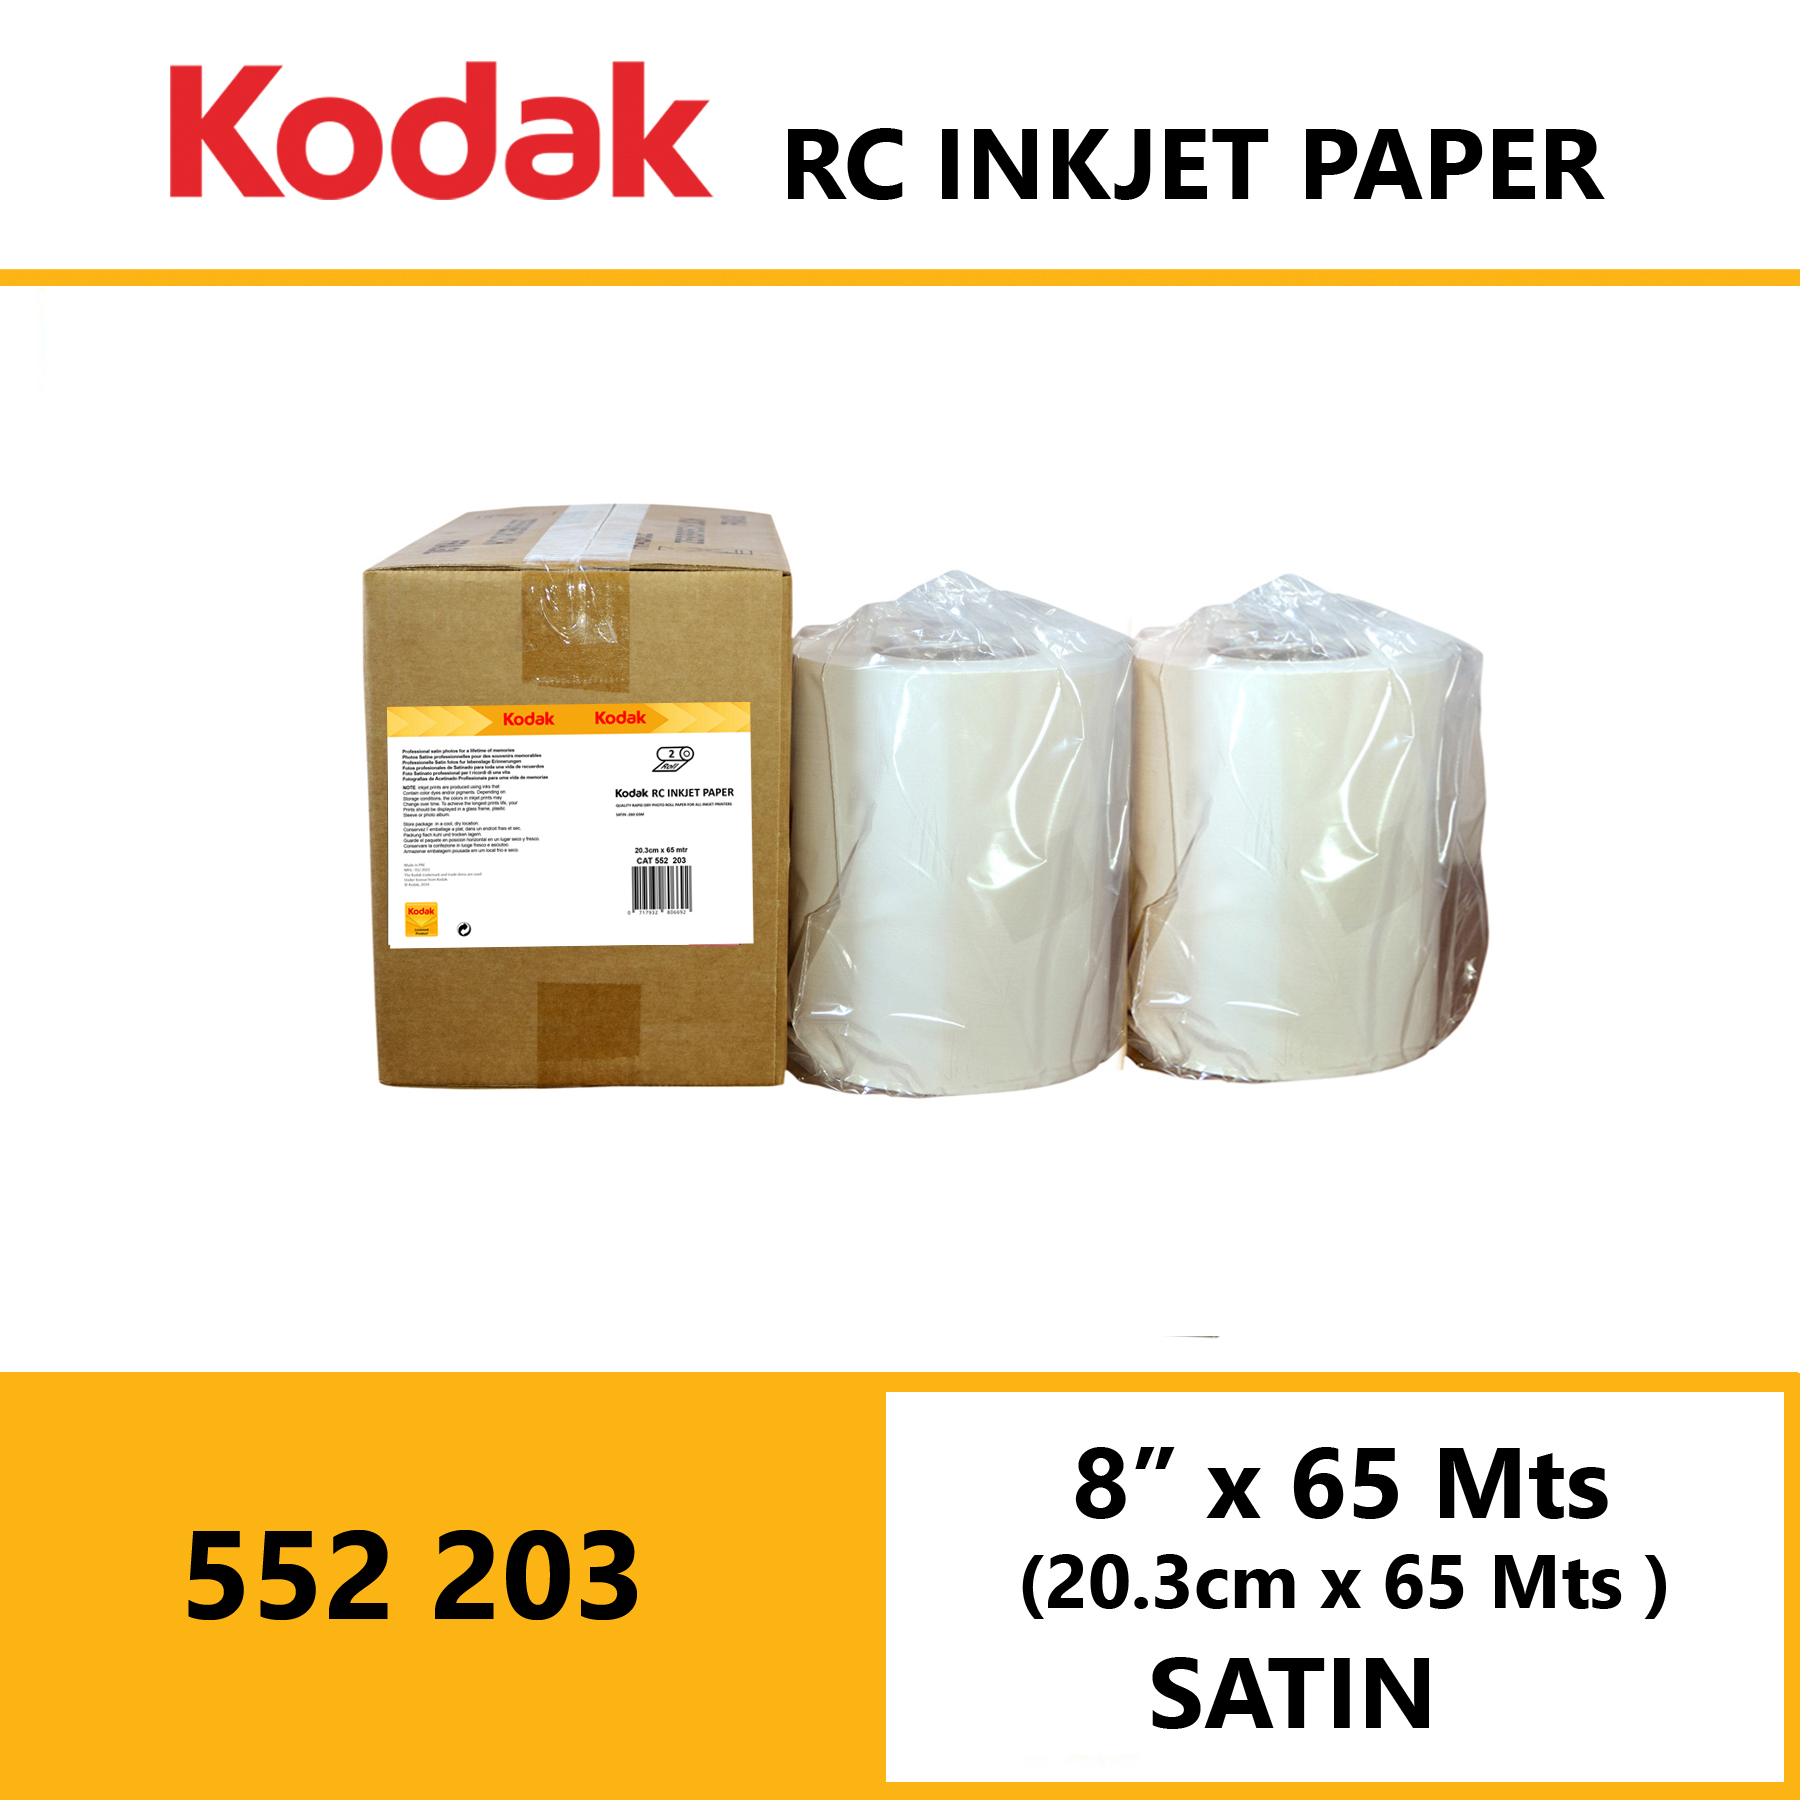 Kodak Inkjet RC Paper 8 ” x 65 Mtrs Satin